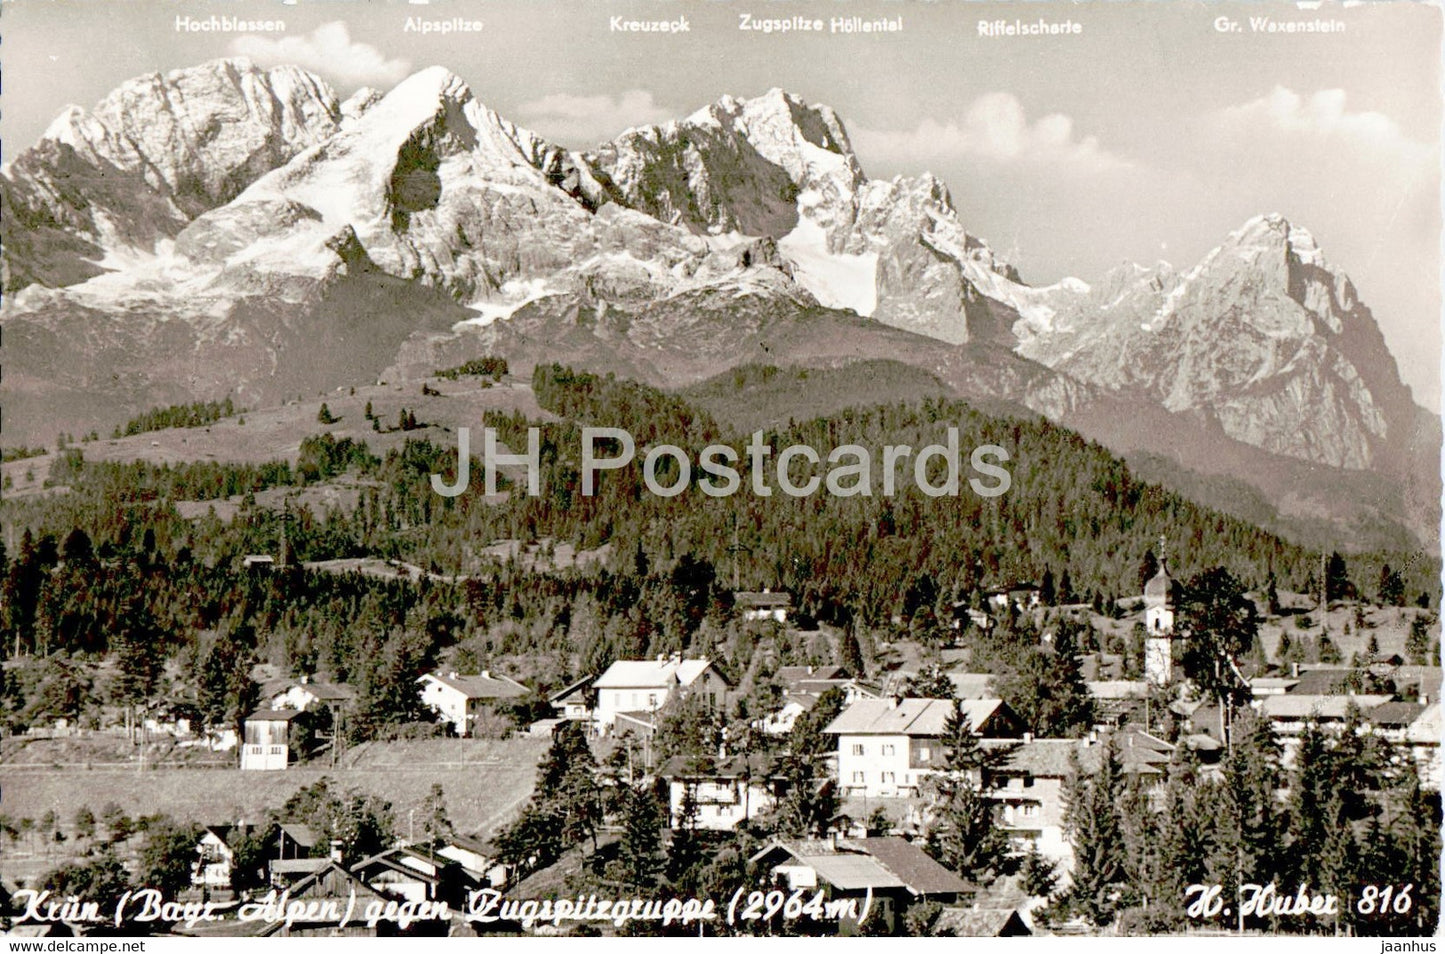 Krun gegen Zugspitzgruppe 2964 m - old postcard - 1957 - Germany - used - JH Postcards